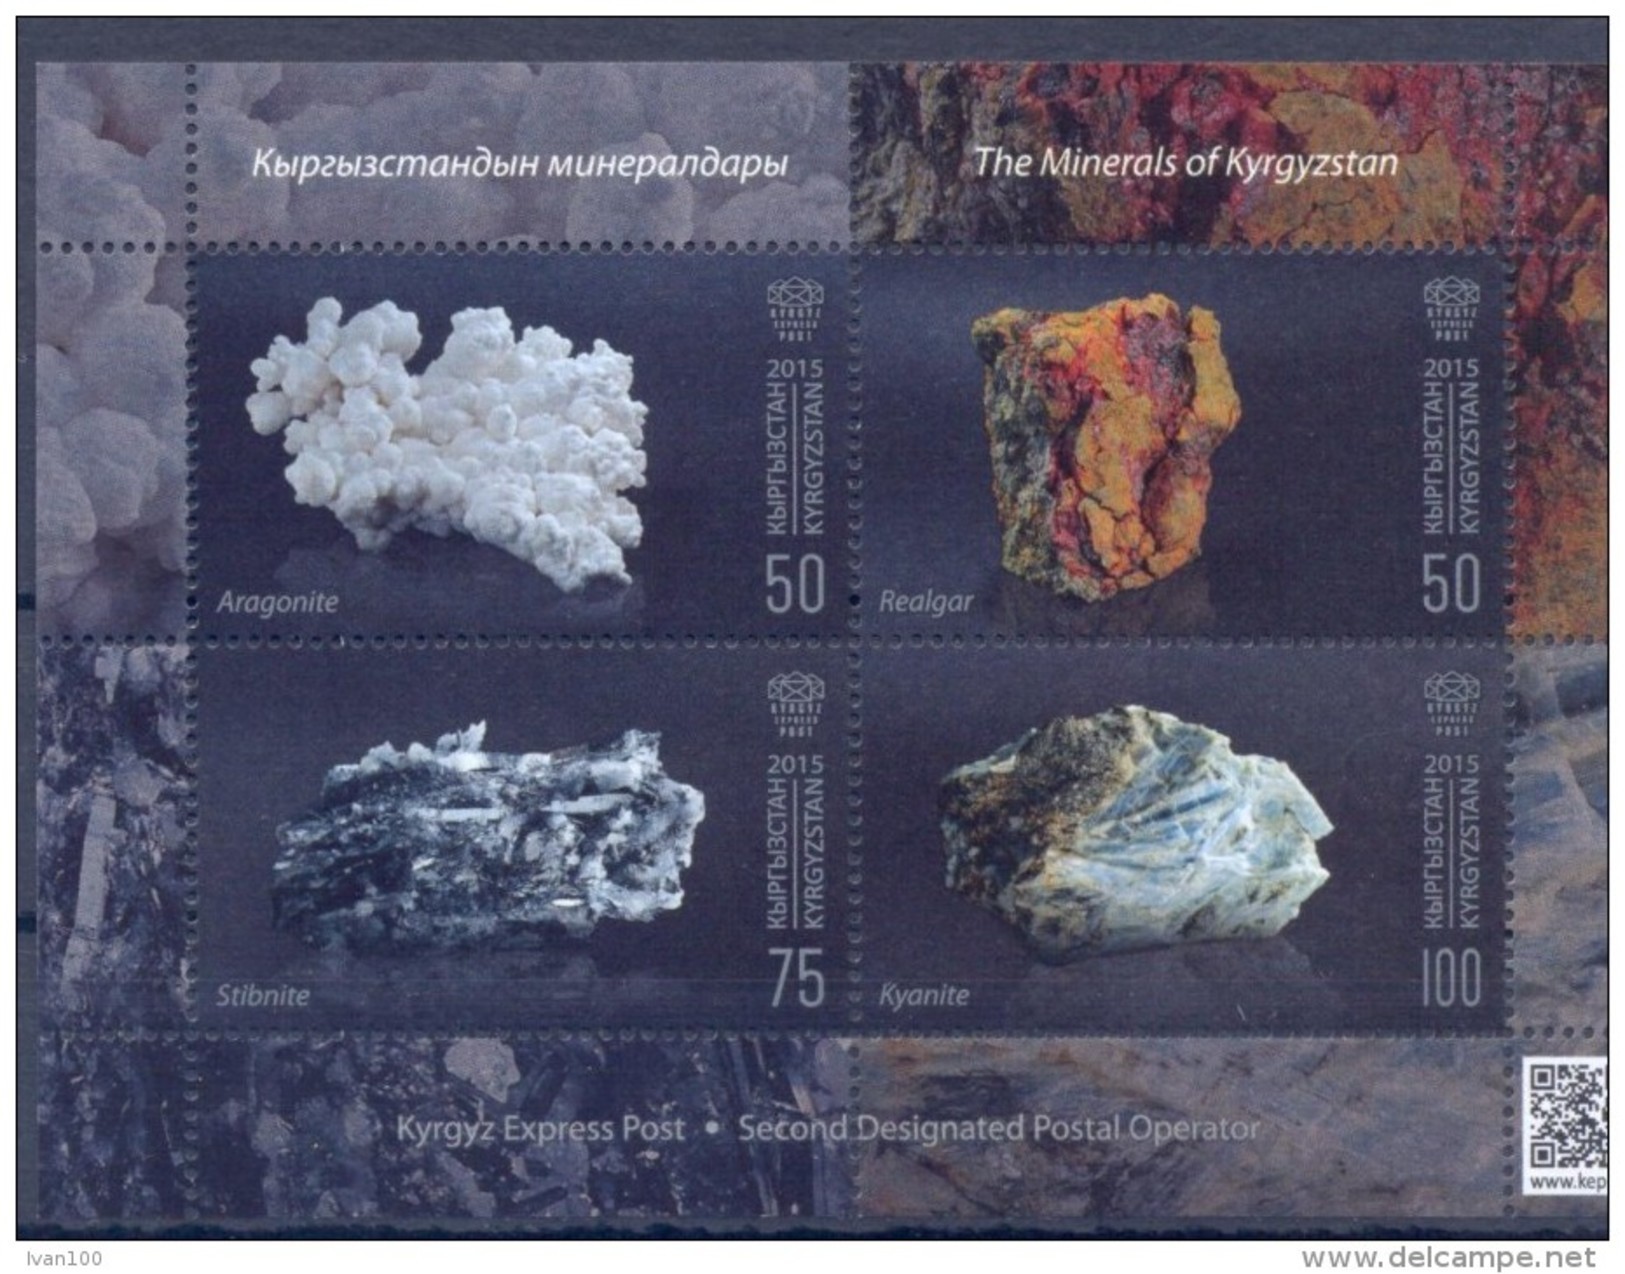 Kyrgyzstan - 2016. Kyrgyzstan, The Minerals of Kyrgyzstan, s/s, mint/**